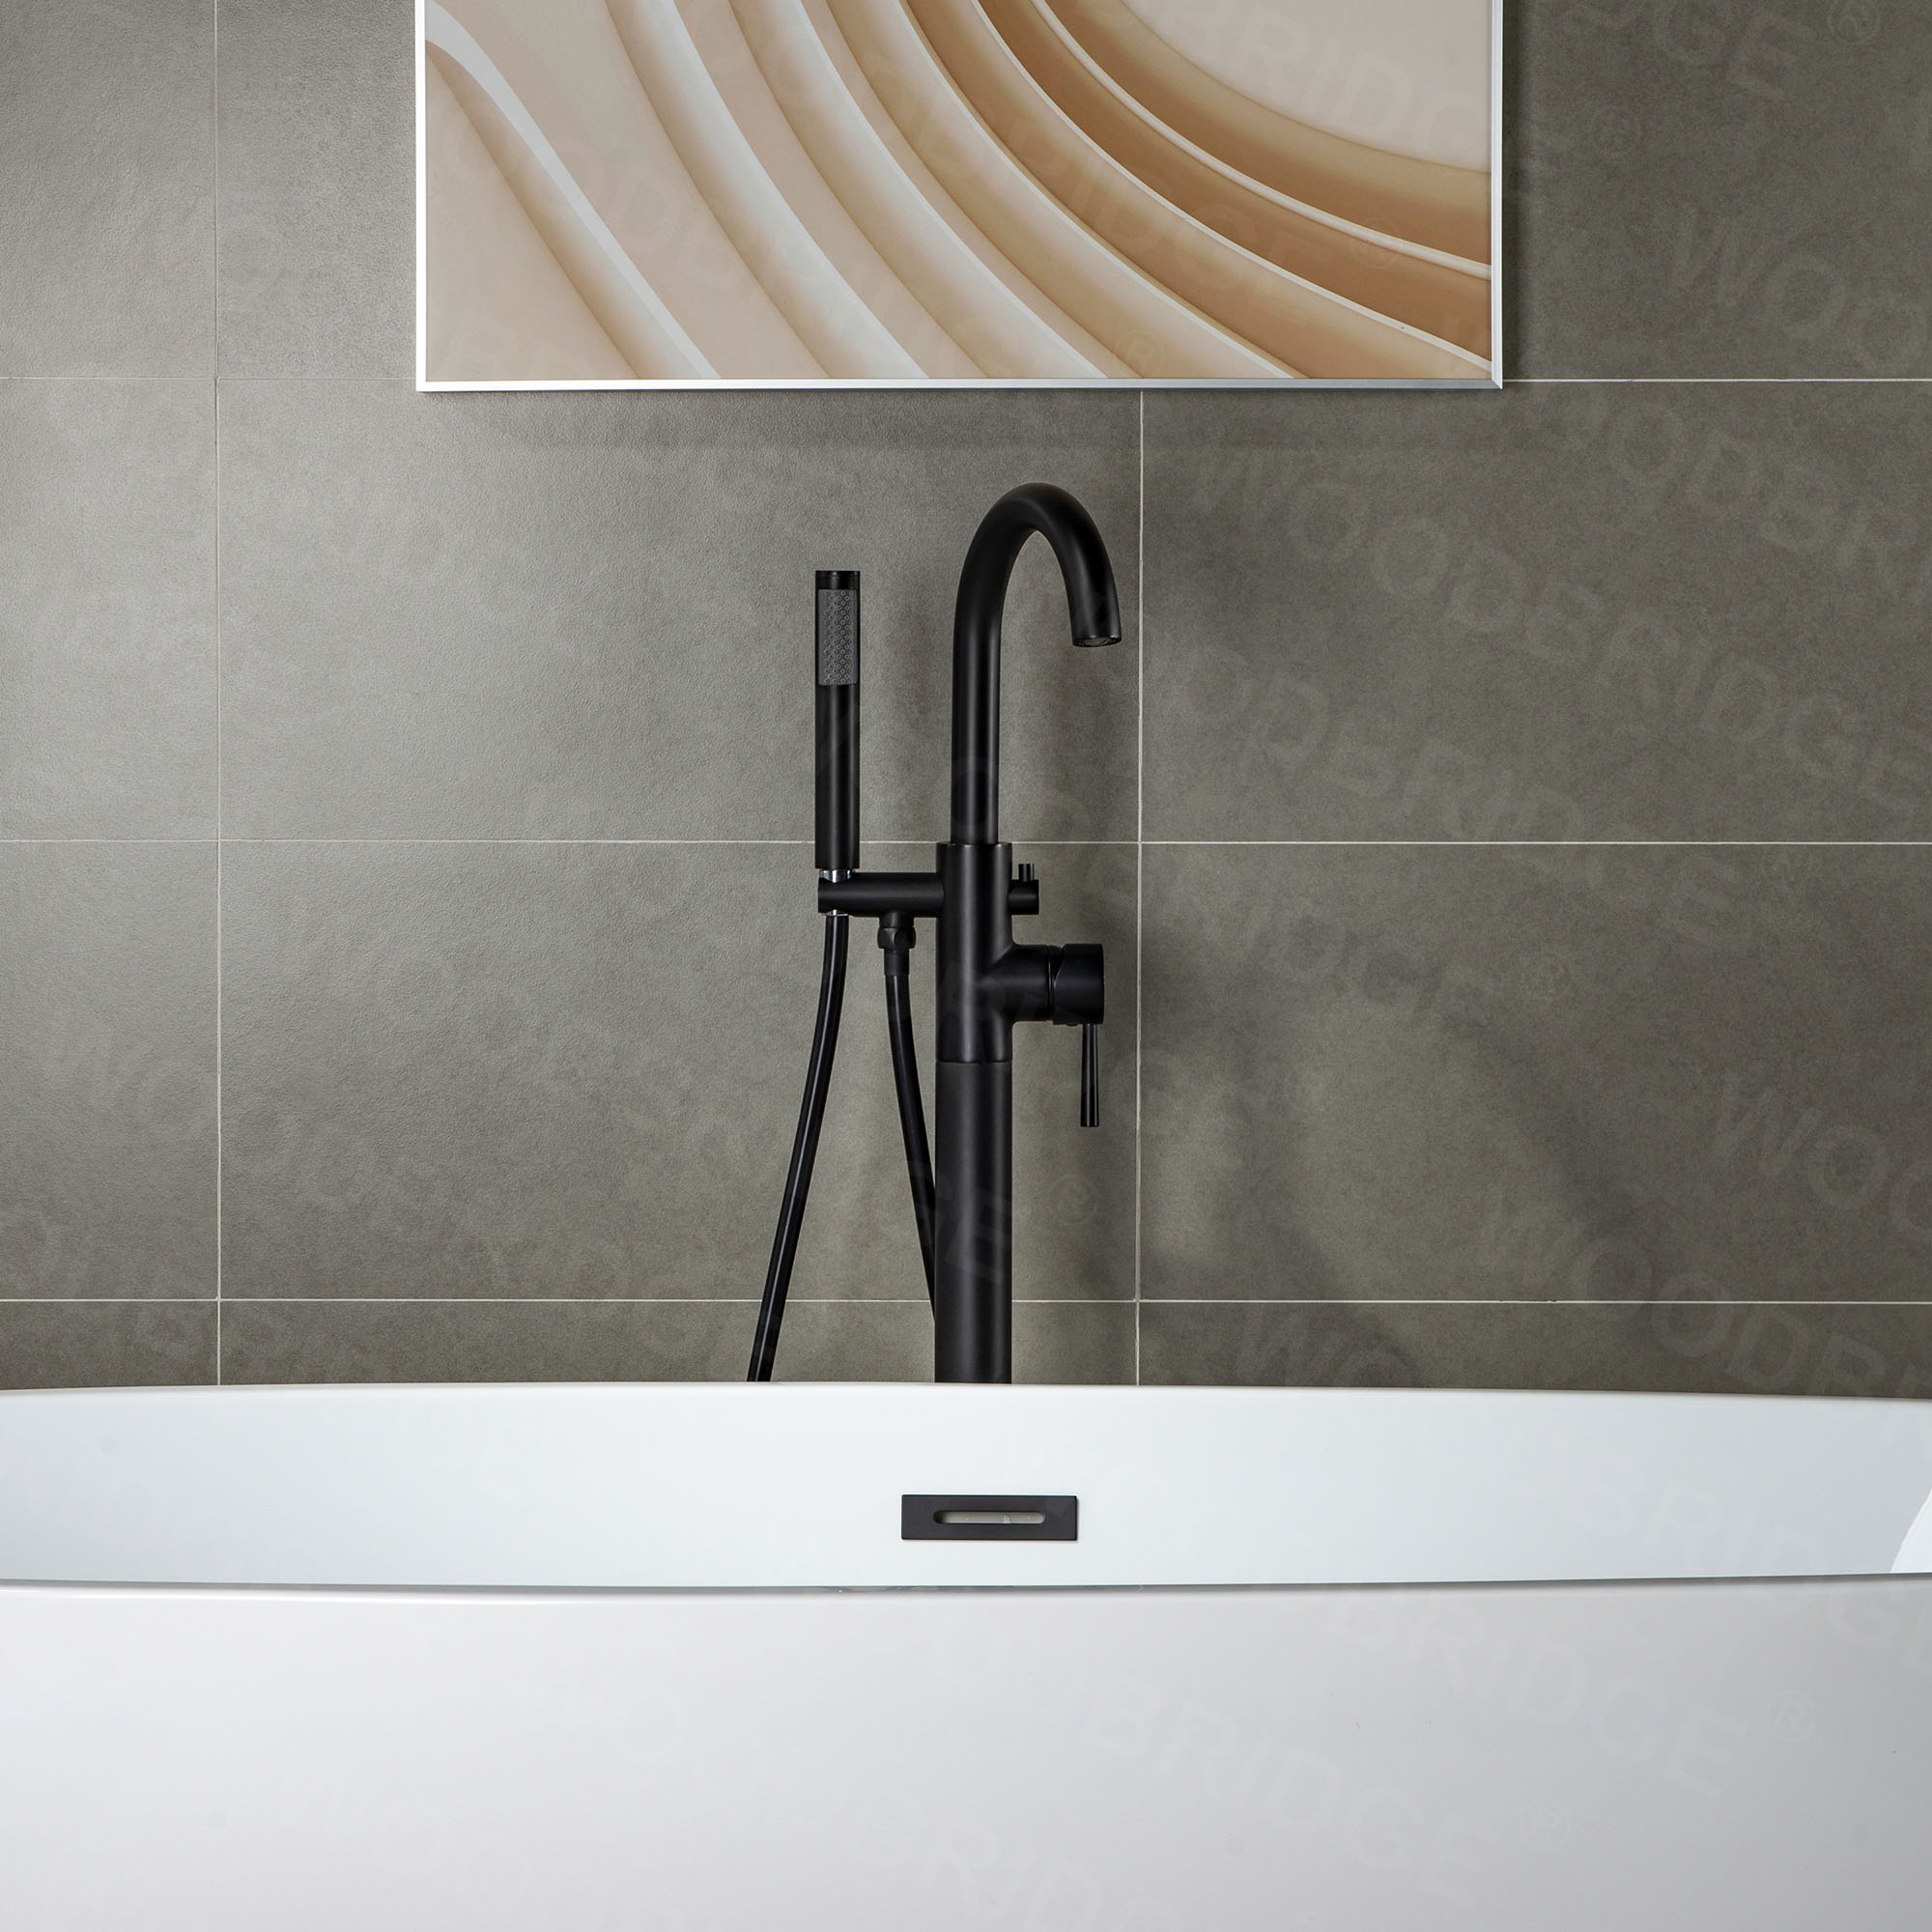  WOODBRIDGE F0006BLRD Contemporary Single Handle Floor Mount Freestanding Tub Filler Faucet with Hand shower in Matte Black Finish._14846